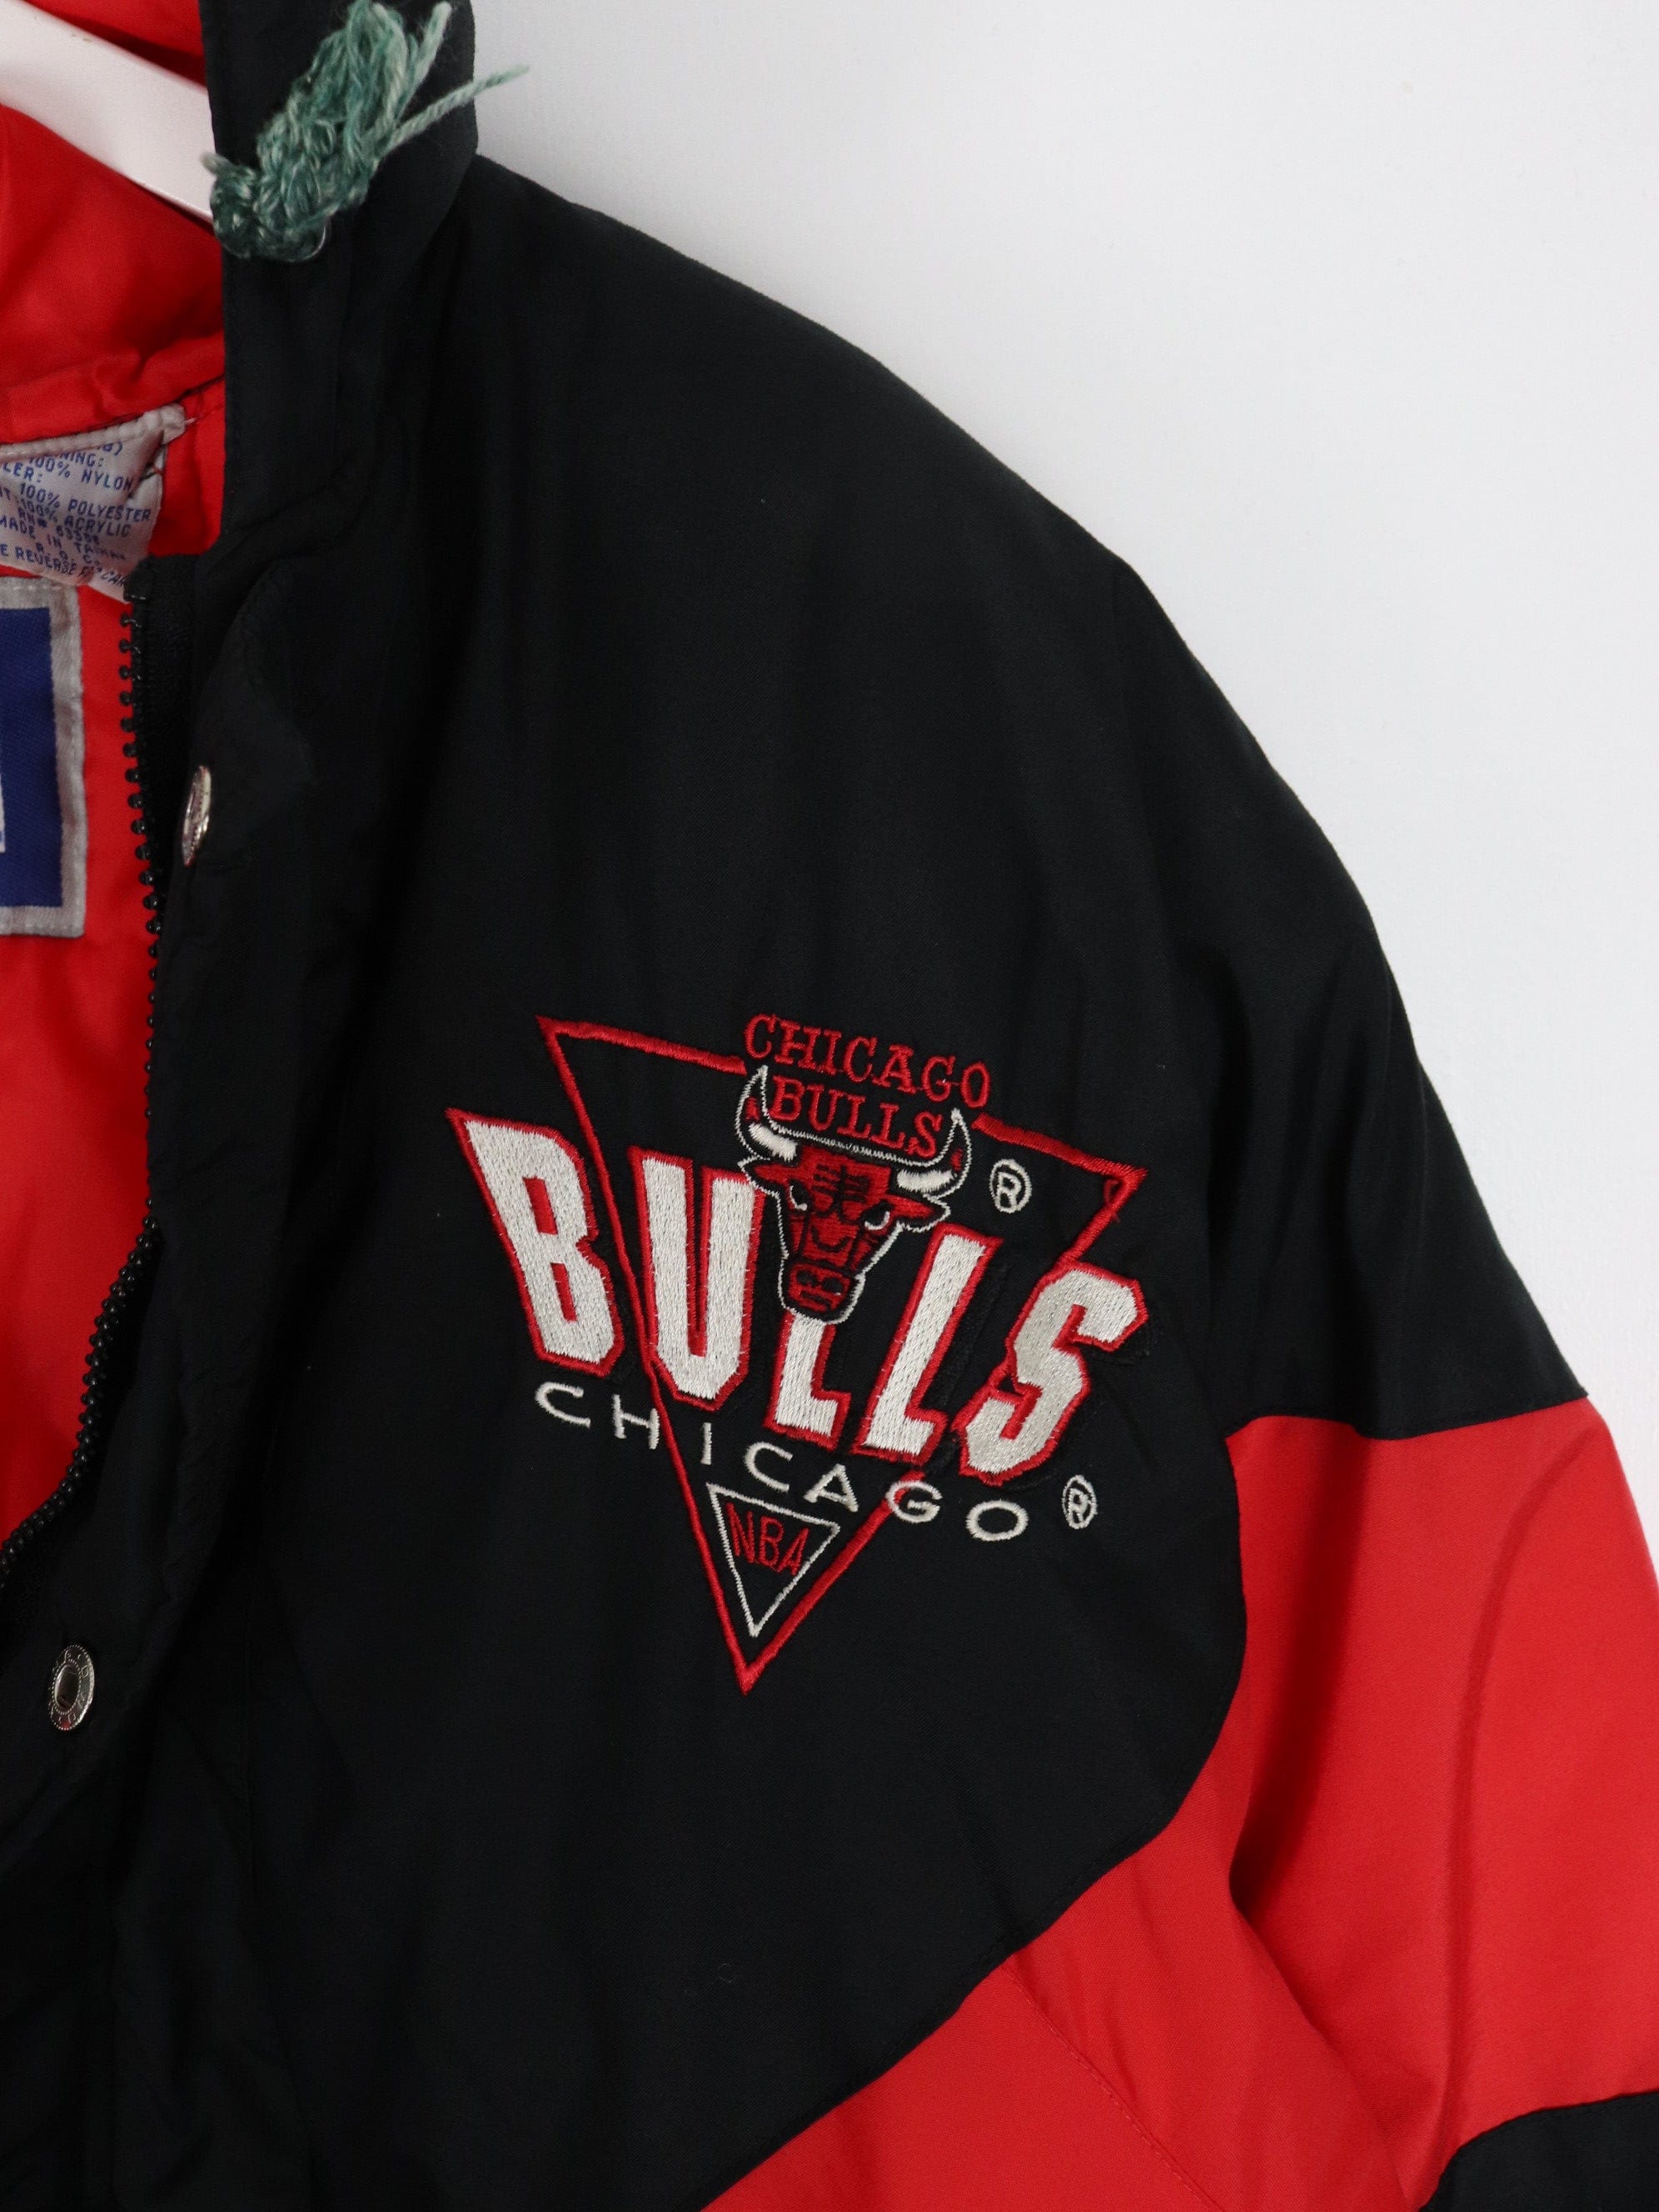 Vintage 90s Oversized Chicago Bulls Red Logo Sweatshirt